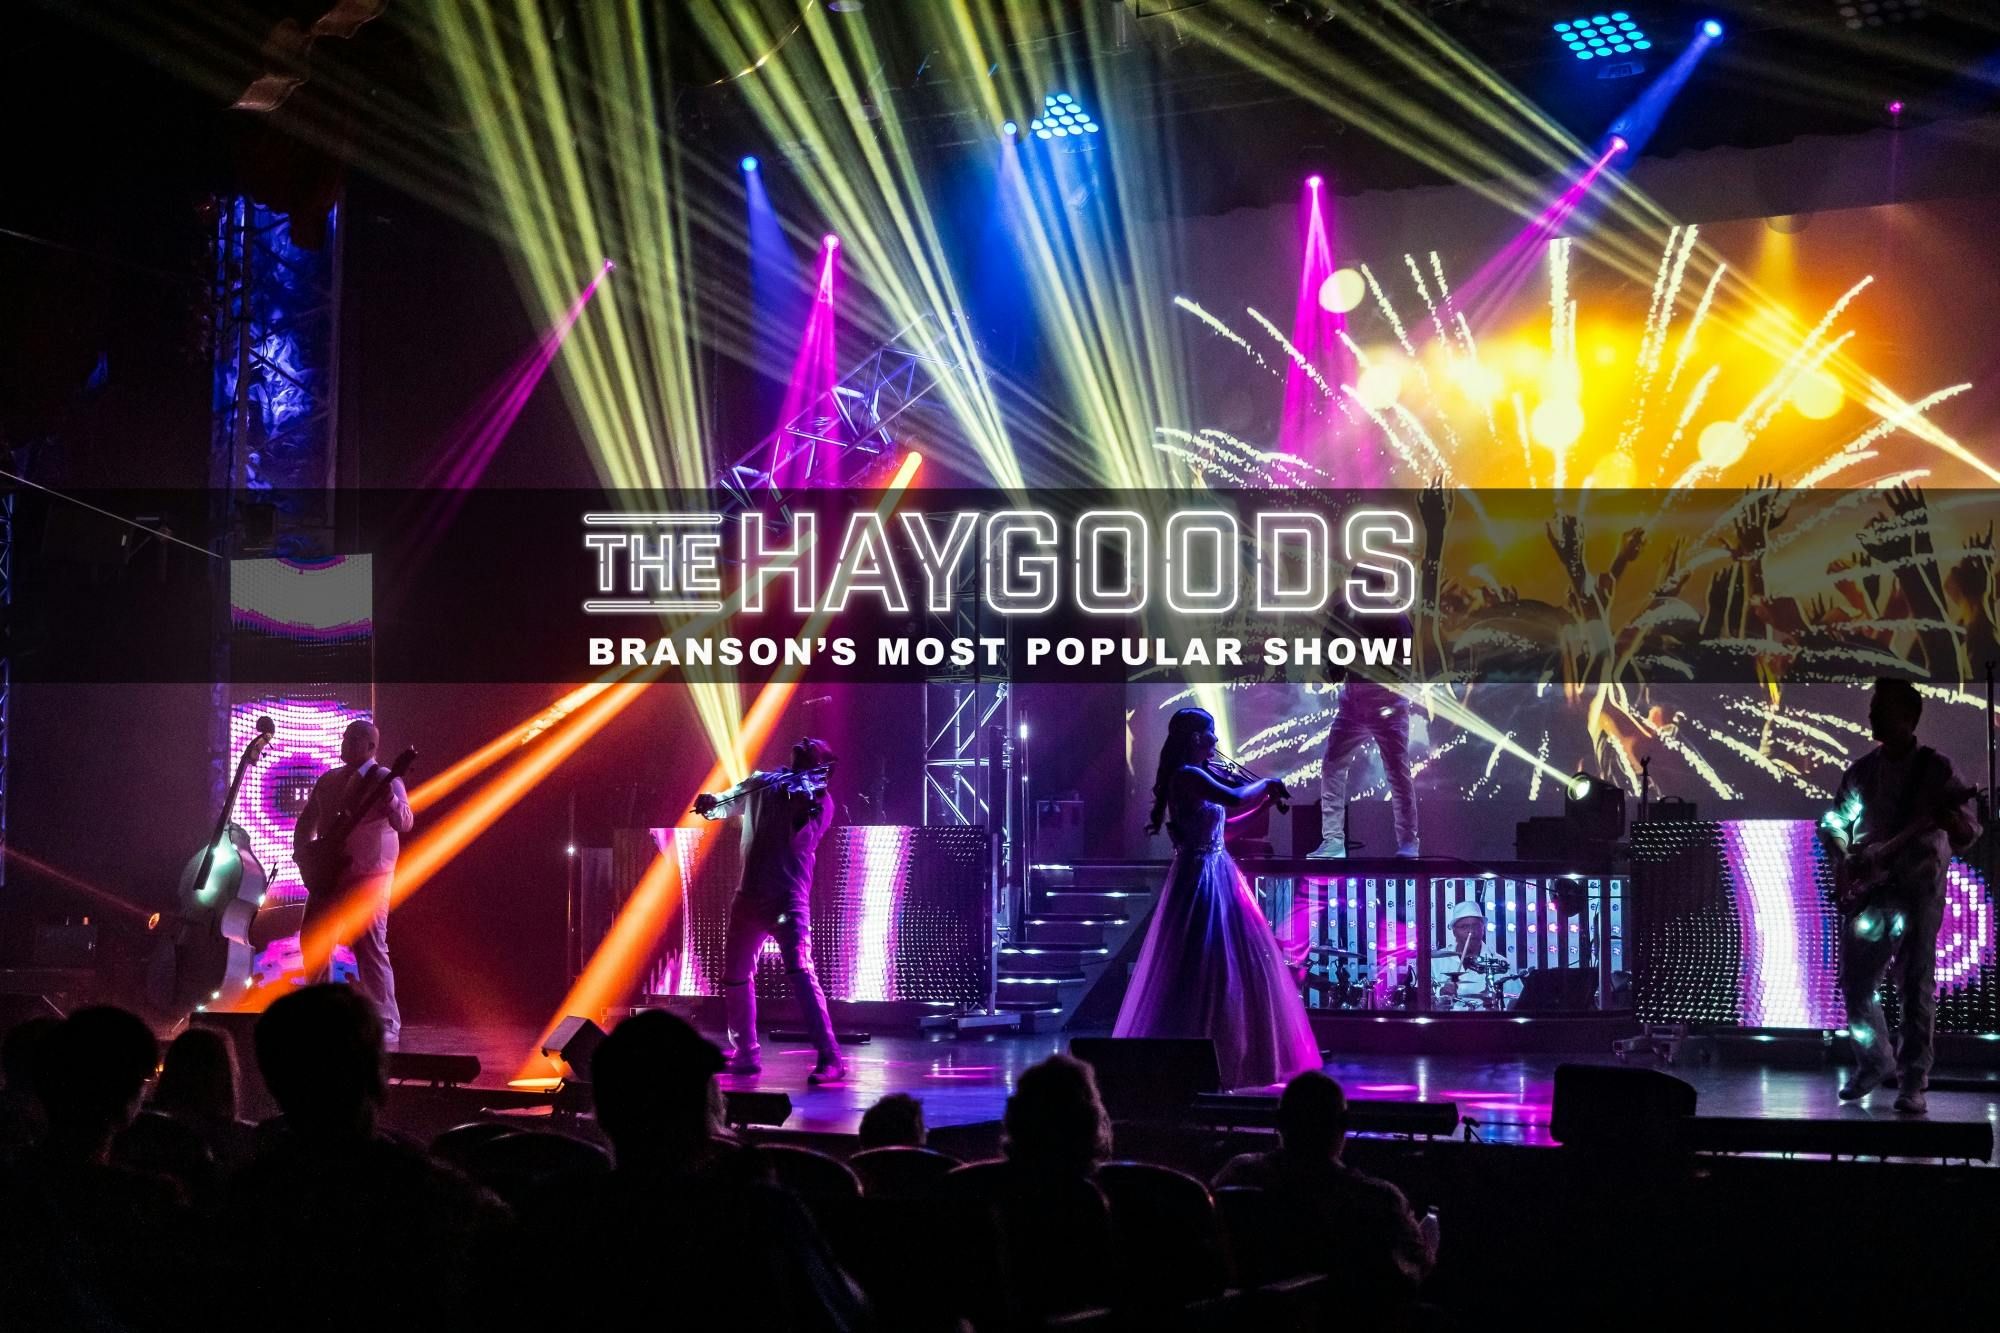 Imagen del tour: El show de Haygoods en Branson, Missouri